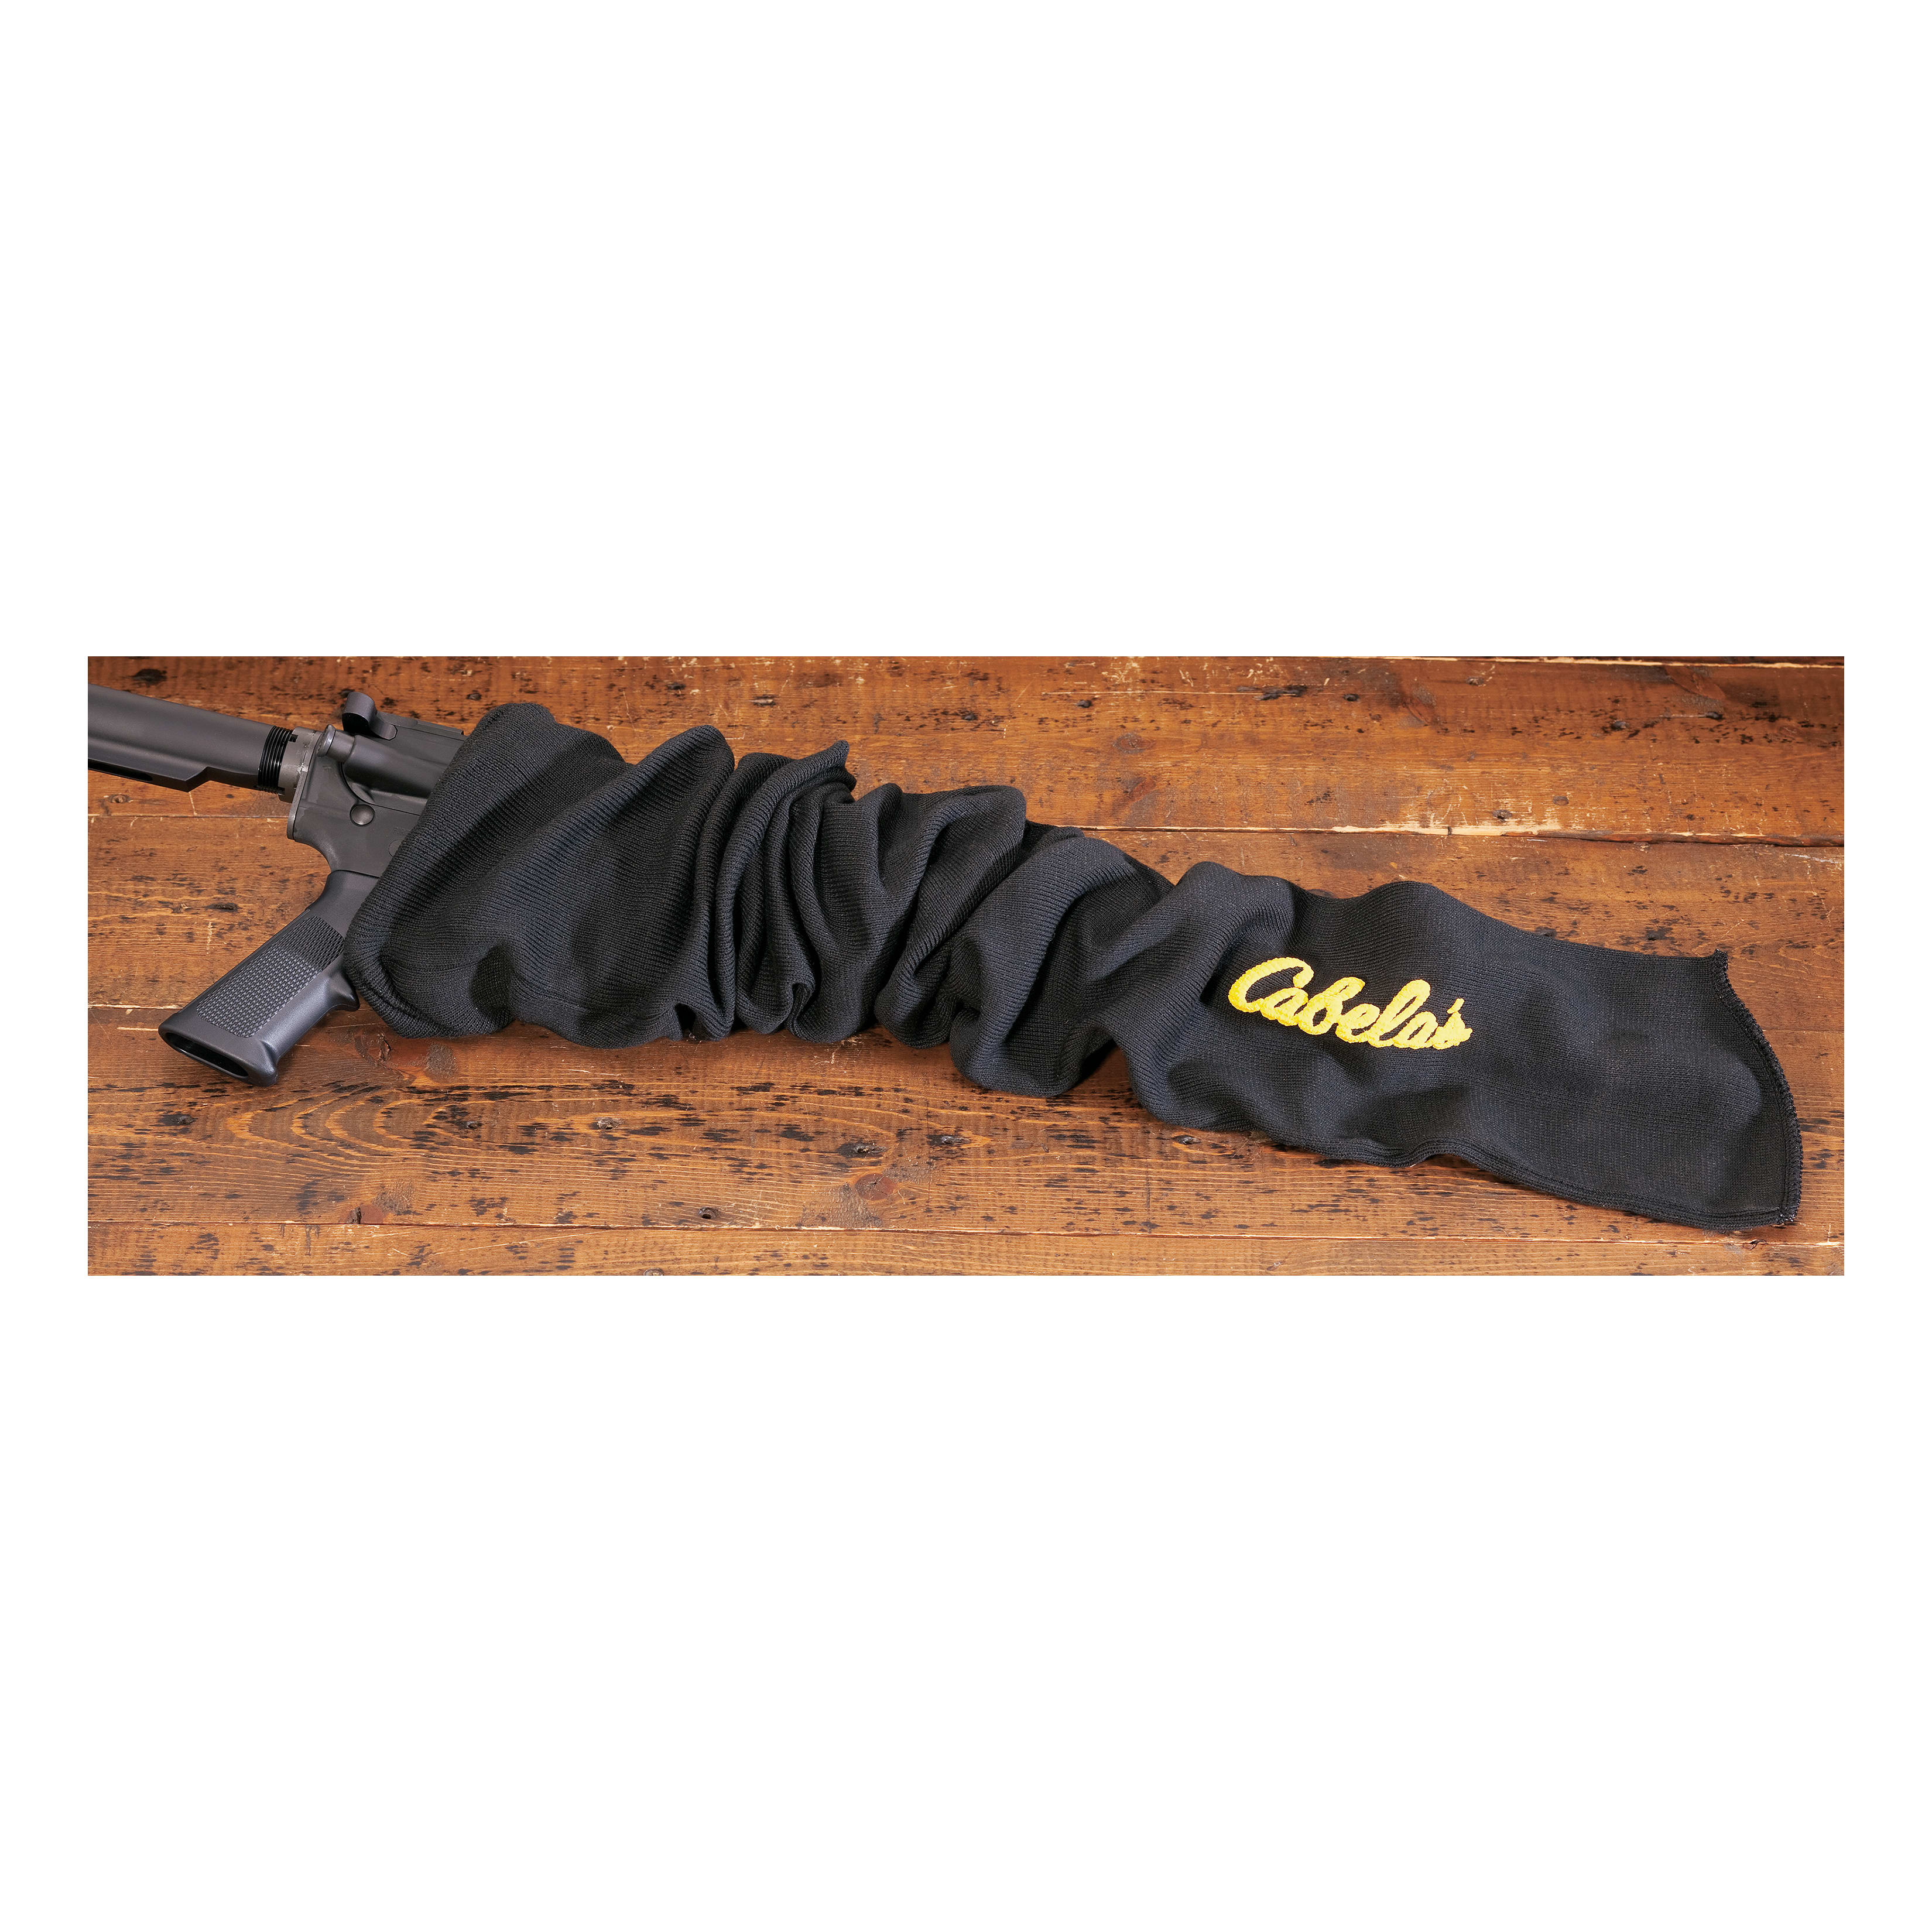 Cabela's 47" Knit Gun Sock